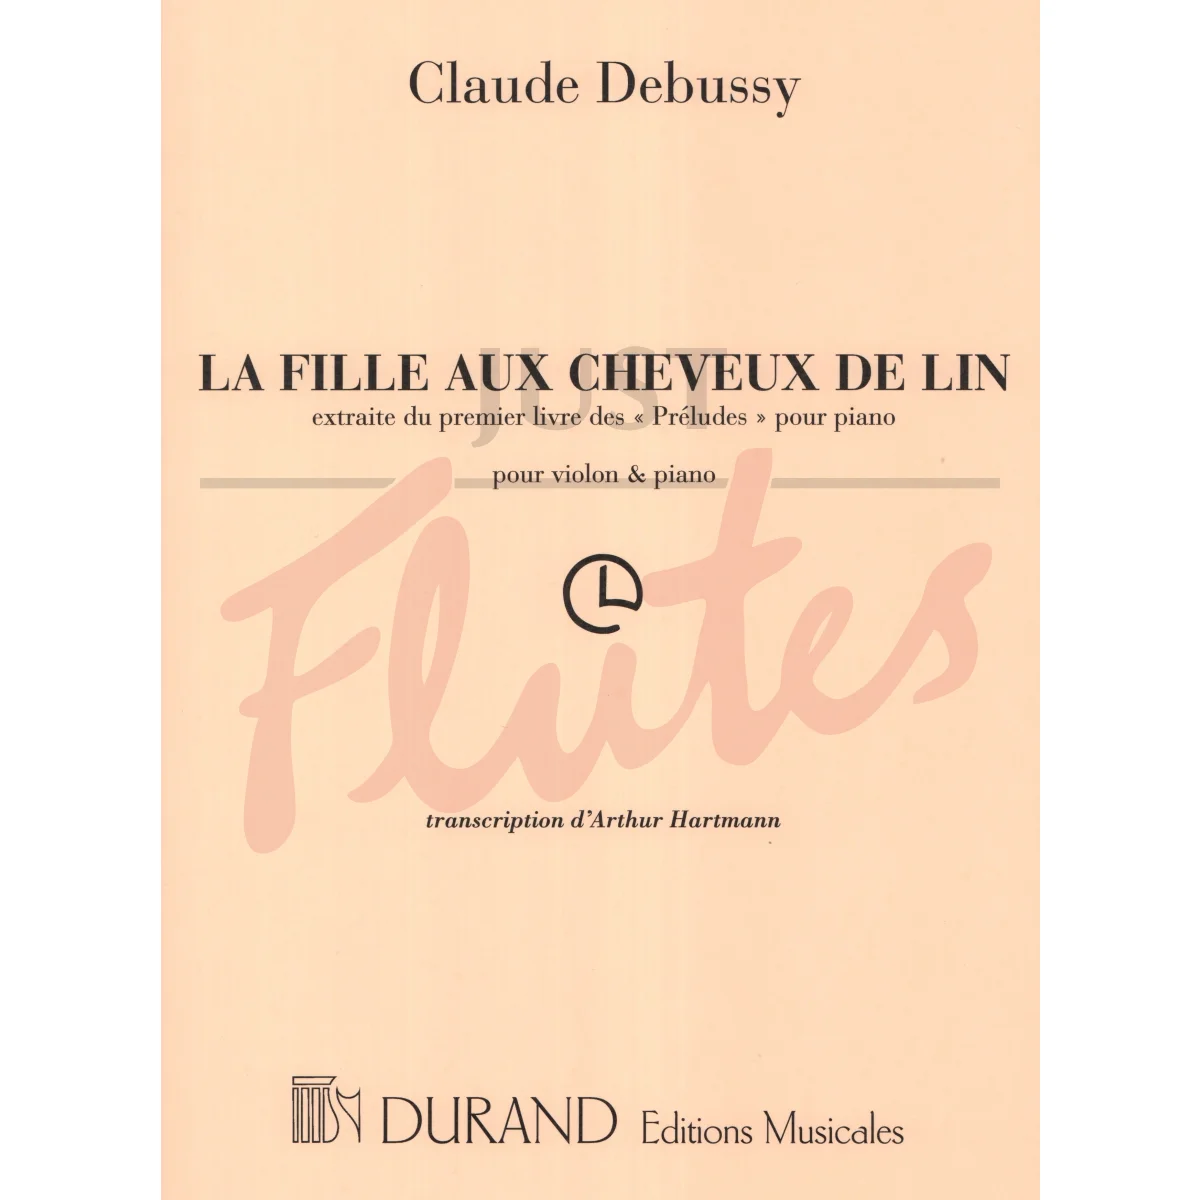 La Fille aux Cheveaux de Lin for Violin and Piano